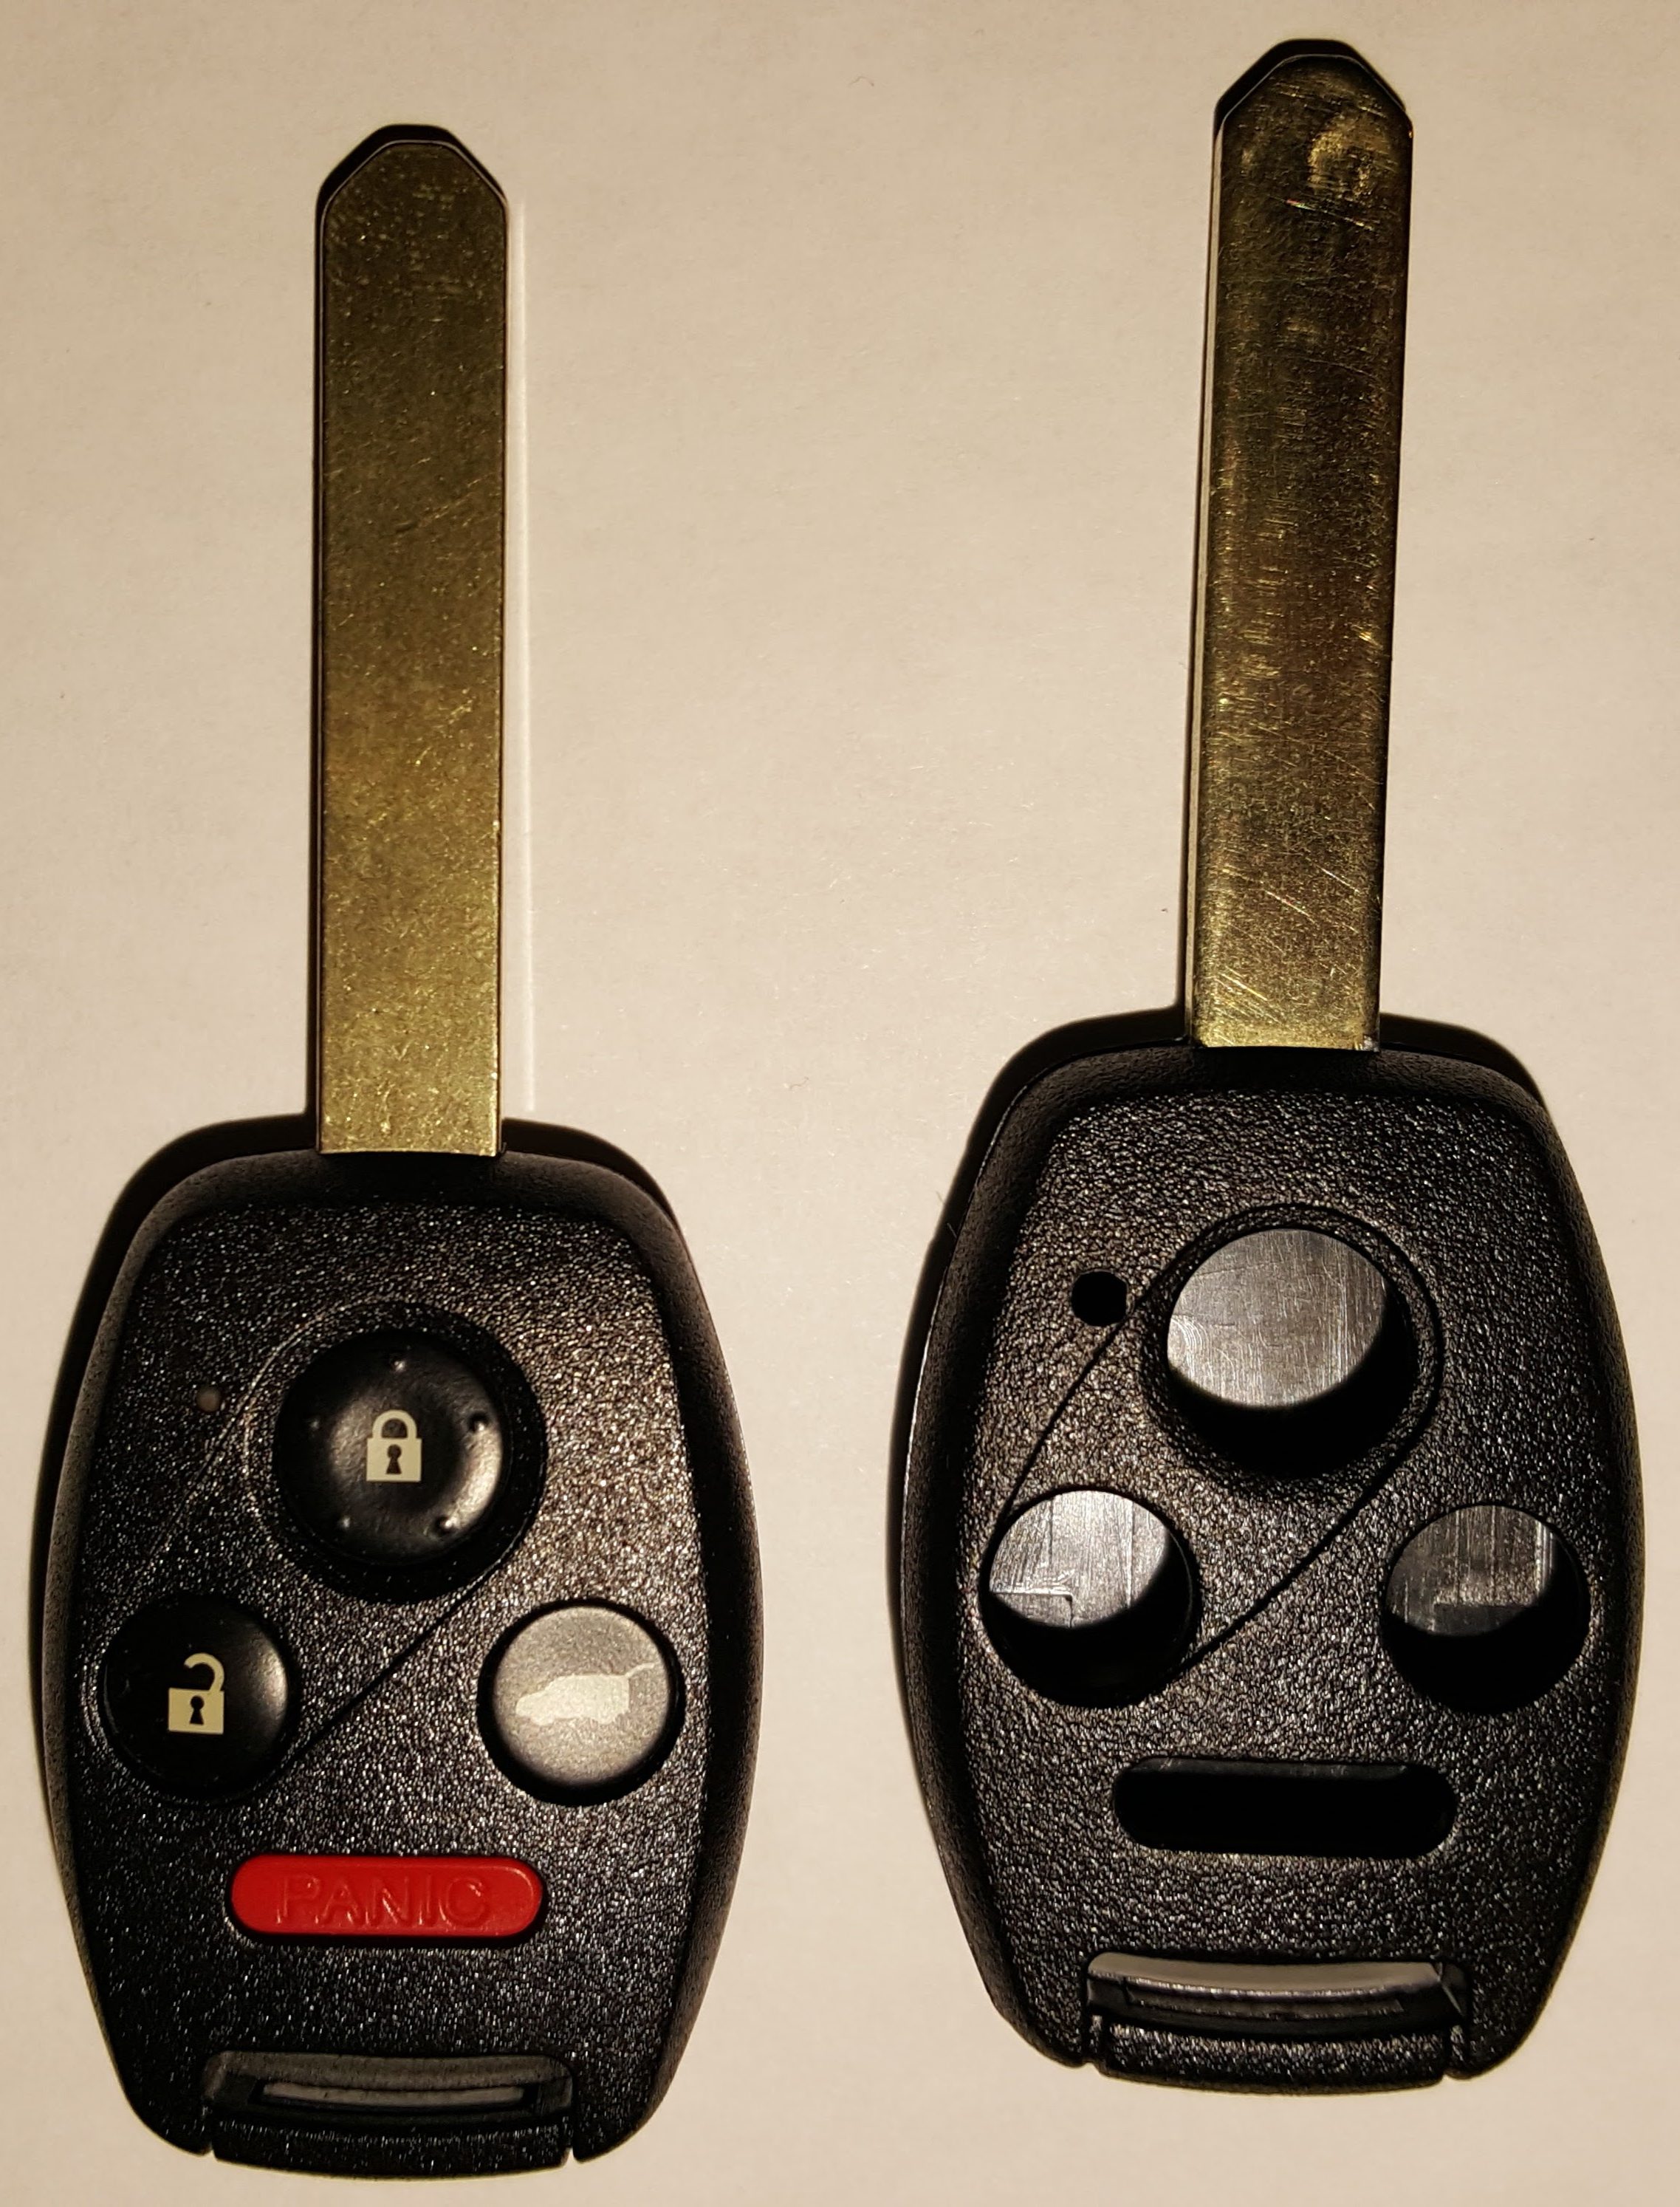 Honda key fob replacement